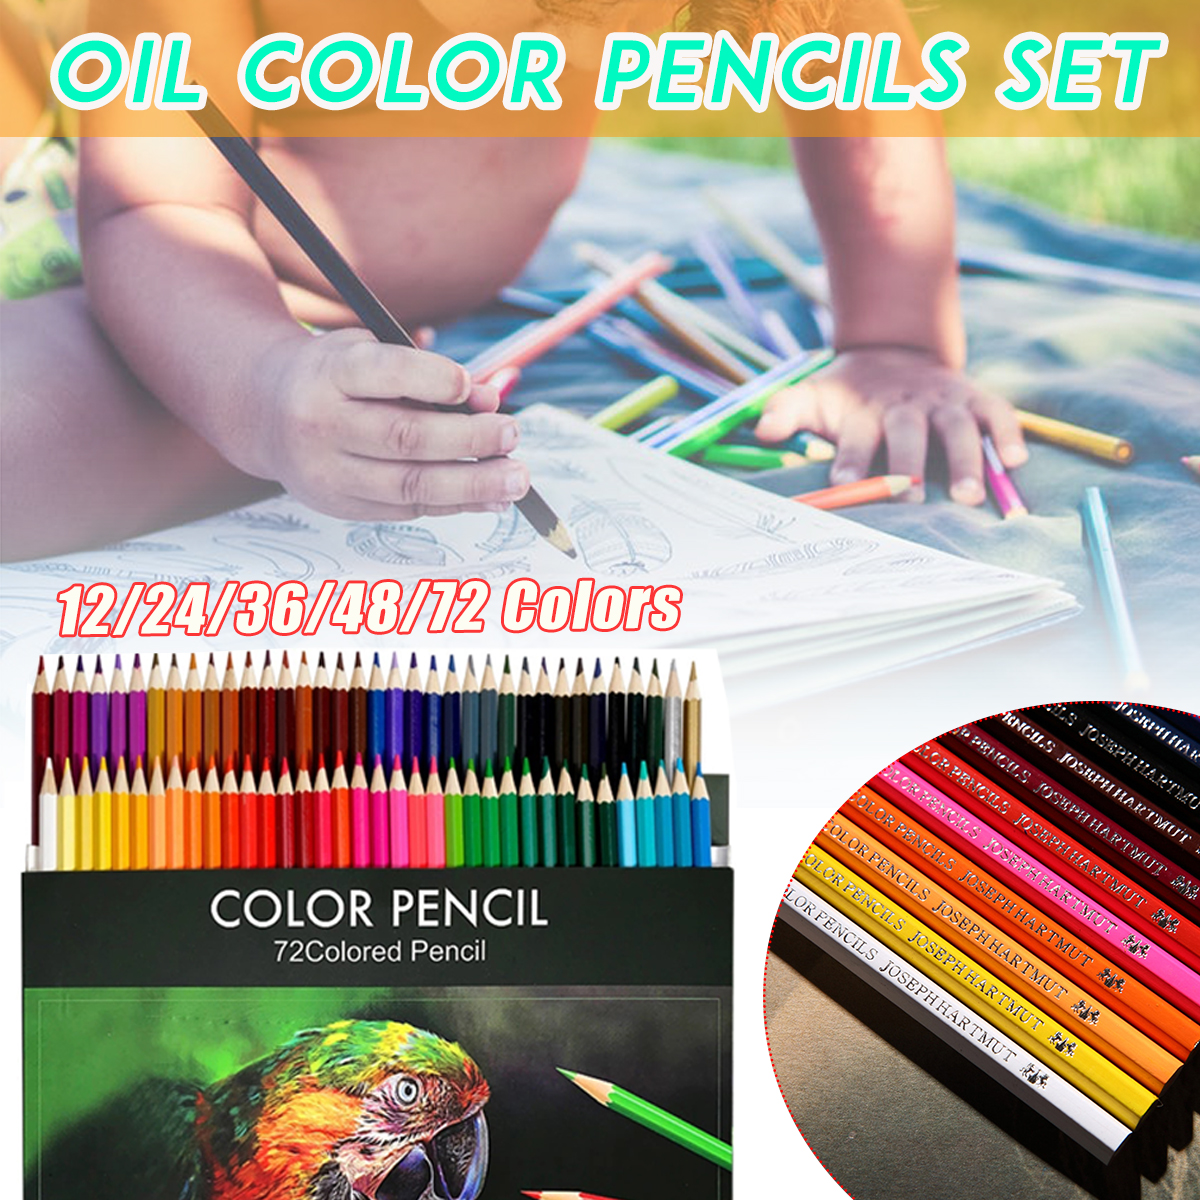 1224364872-Colors-Oil-Colored-Pencils-Set-Artist-Painting-Sketching-Wooden-Color-Pencil-School-Art-S-1610905-1